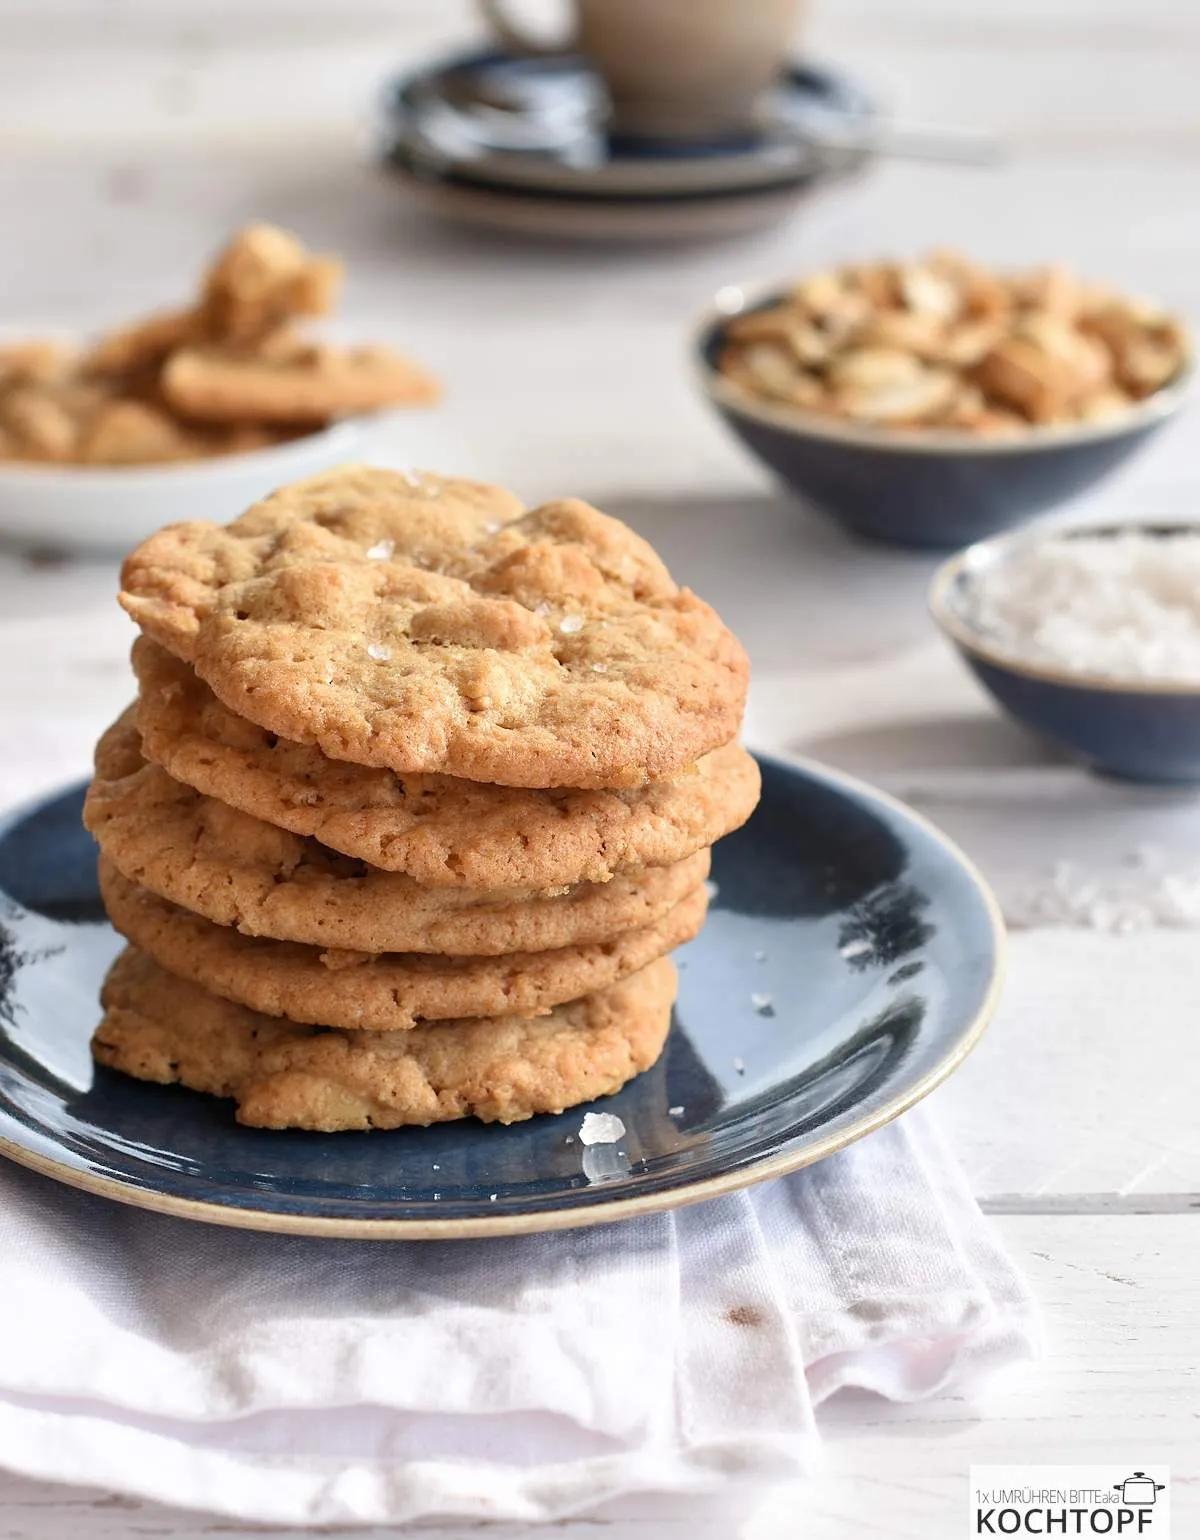 Erdnuss-Cookies mit gesalzenen Erdnüssen – 1x umrühren bitte aka kochtopf